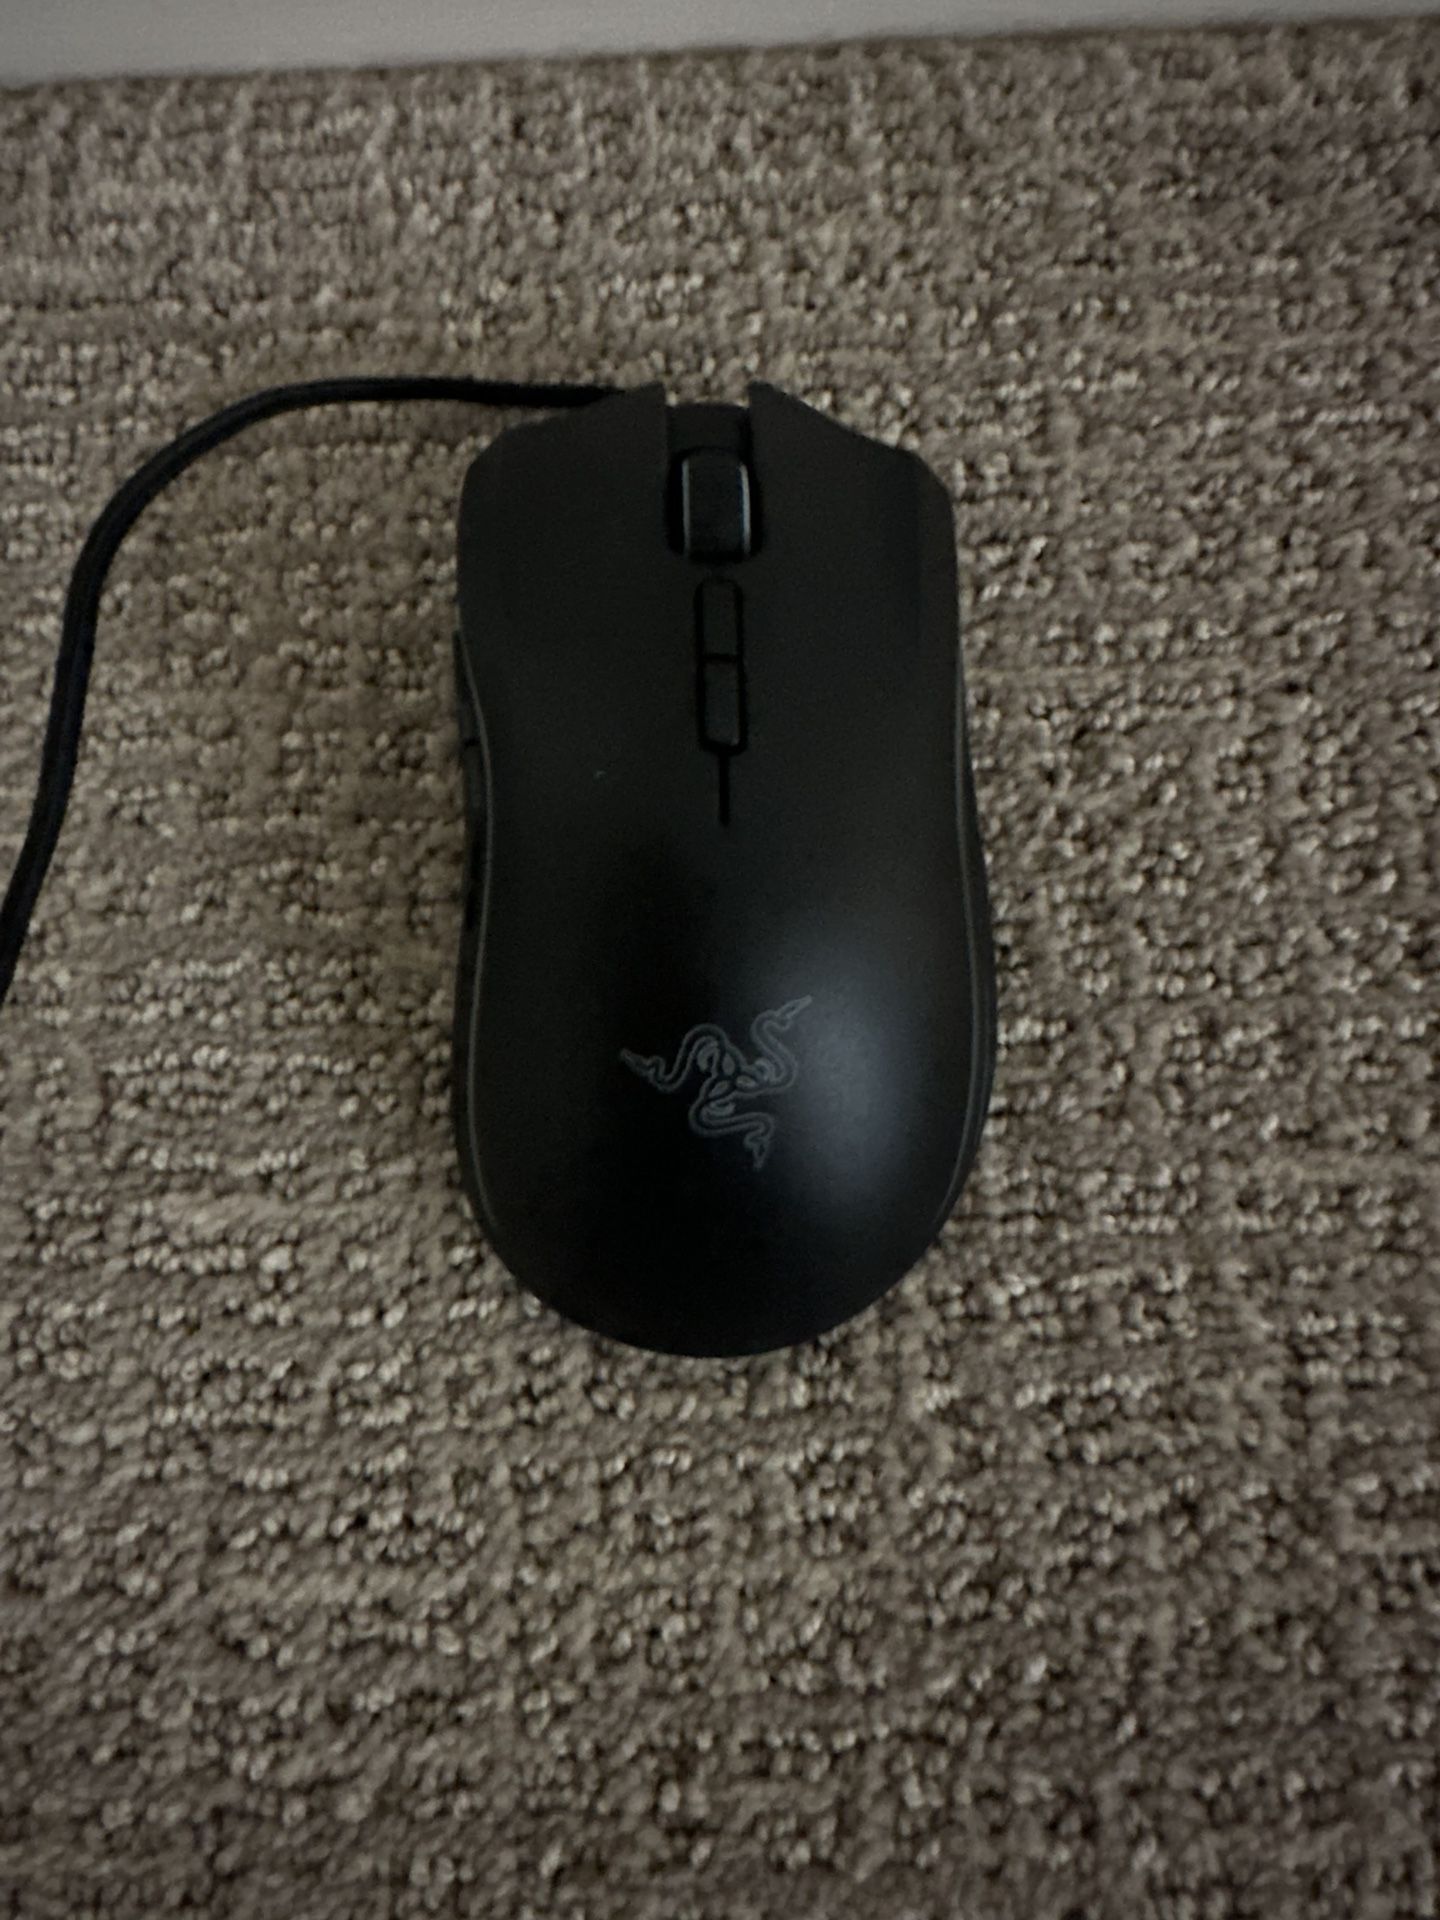 Razer Mamba Gaming Mouse 